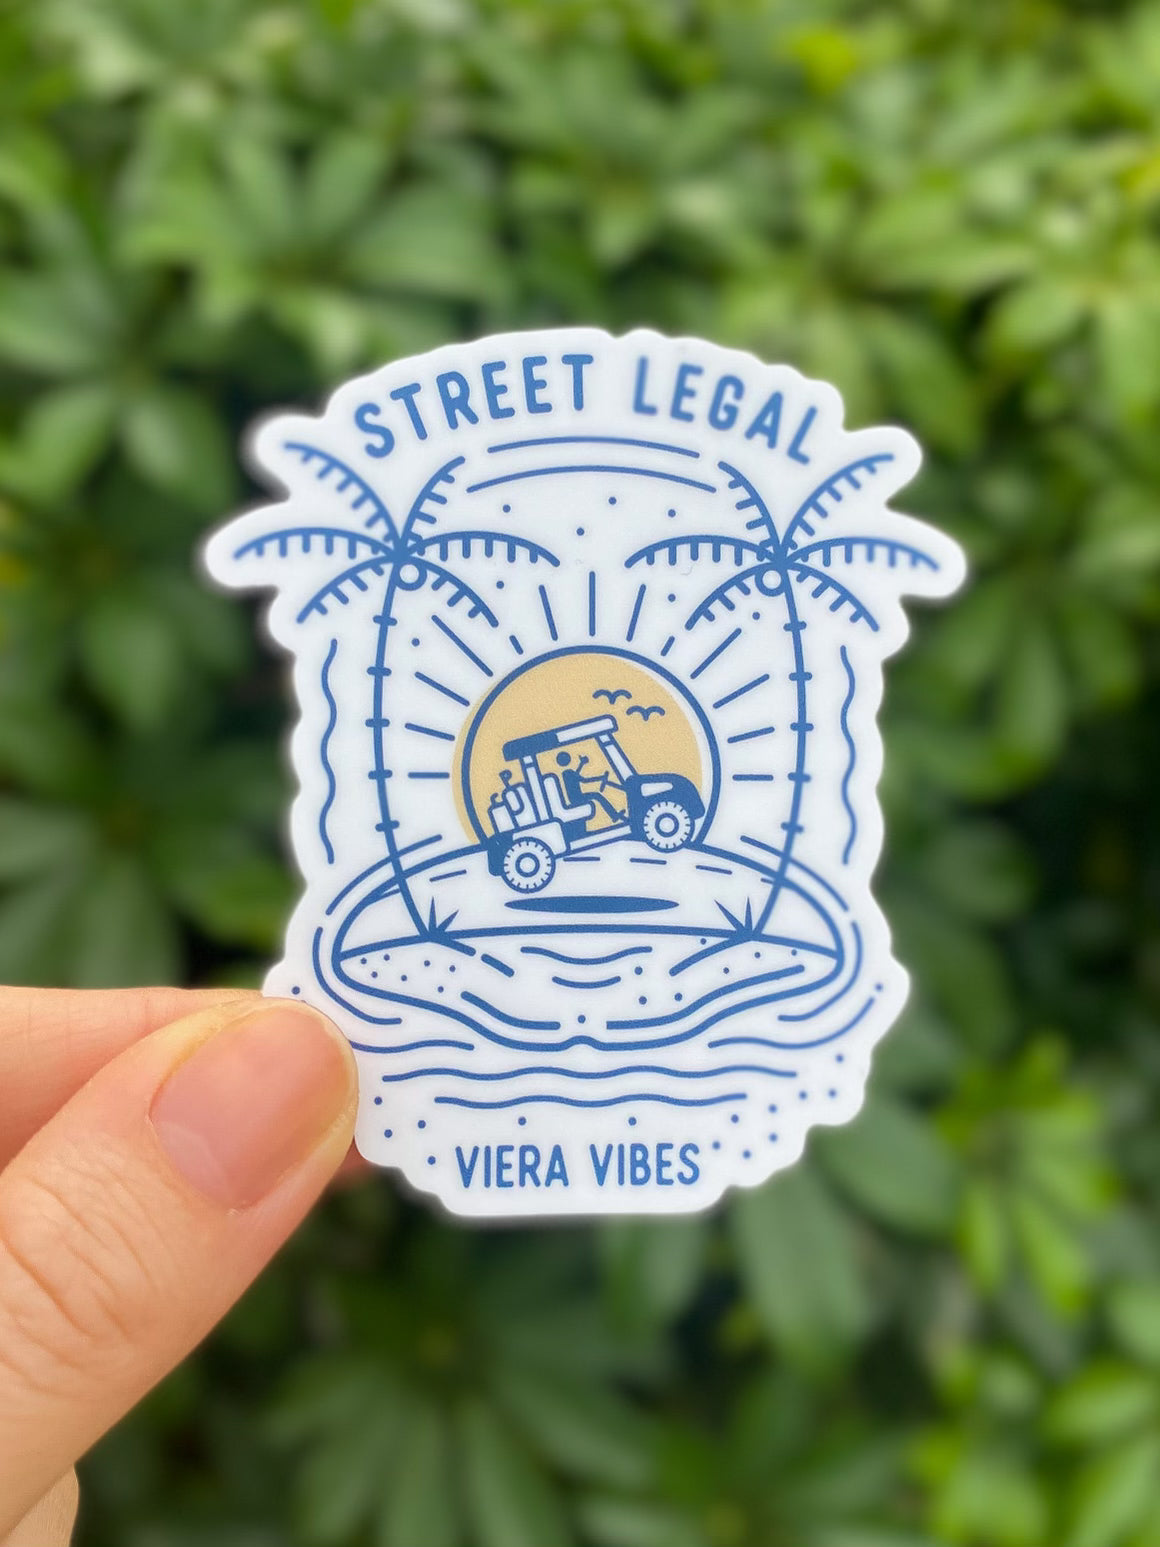 street legal sticker